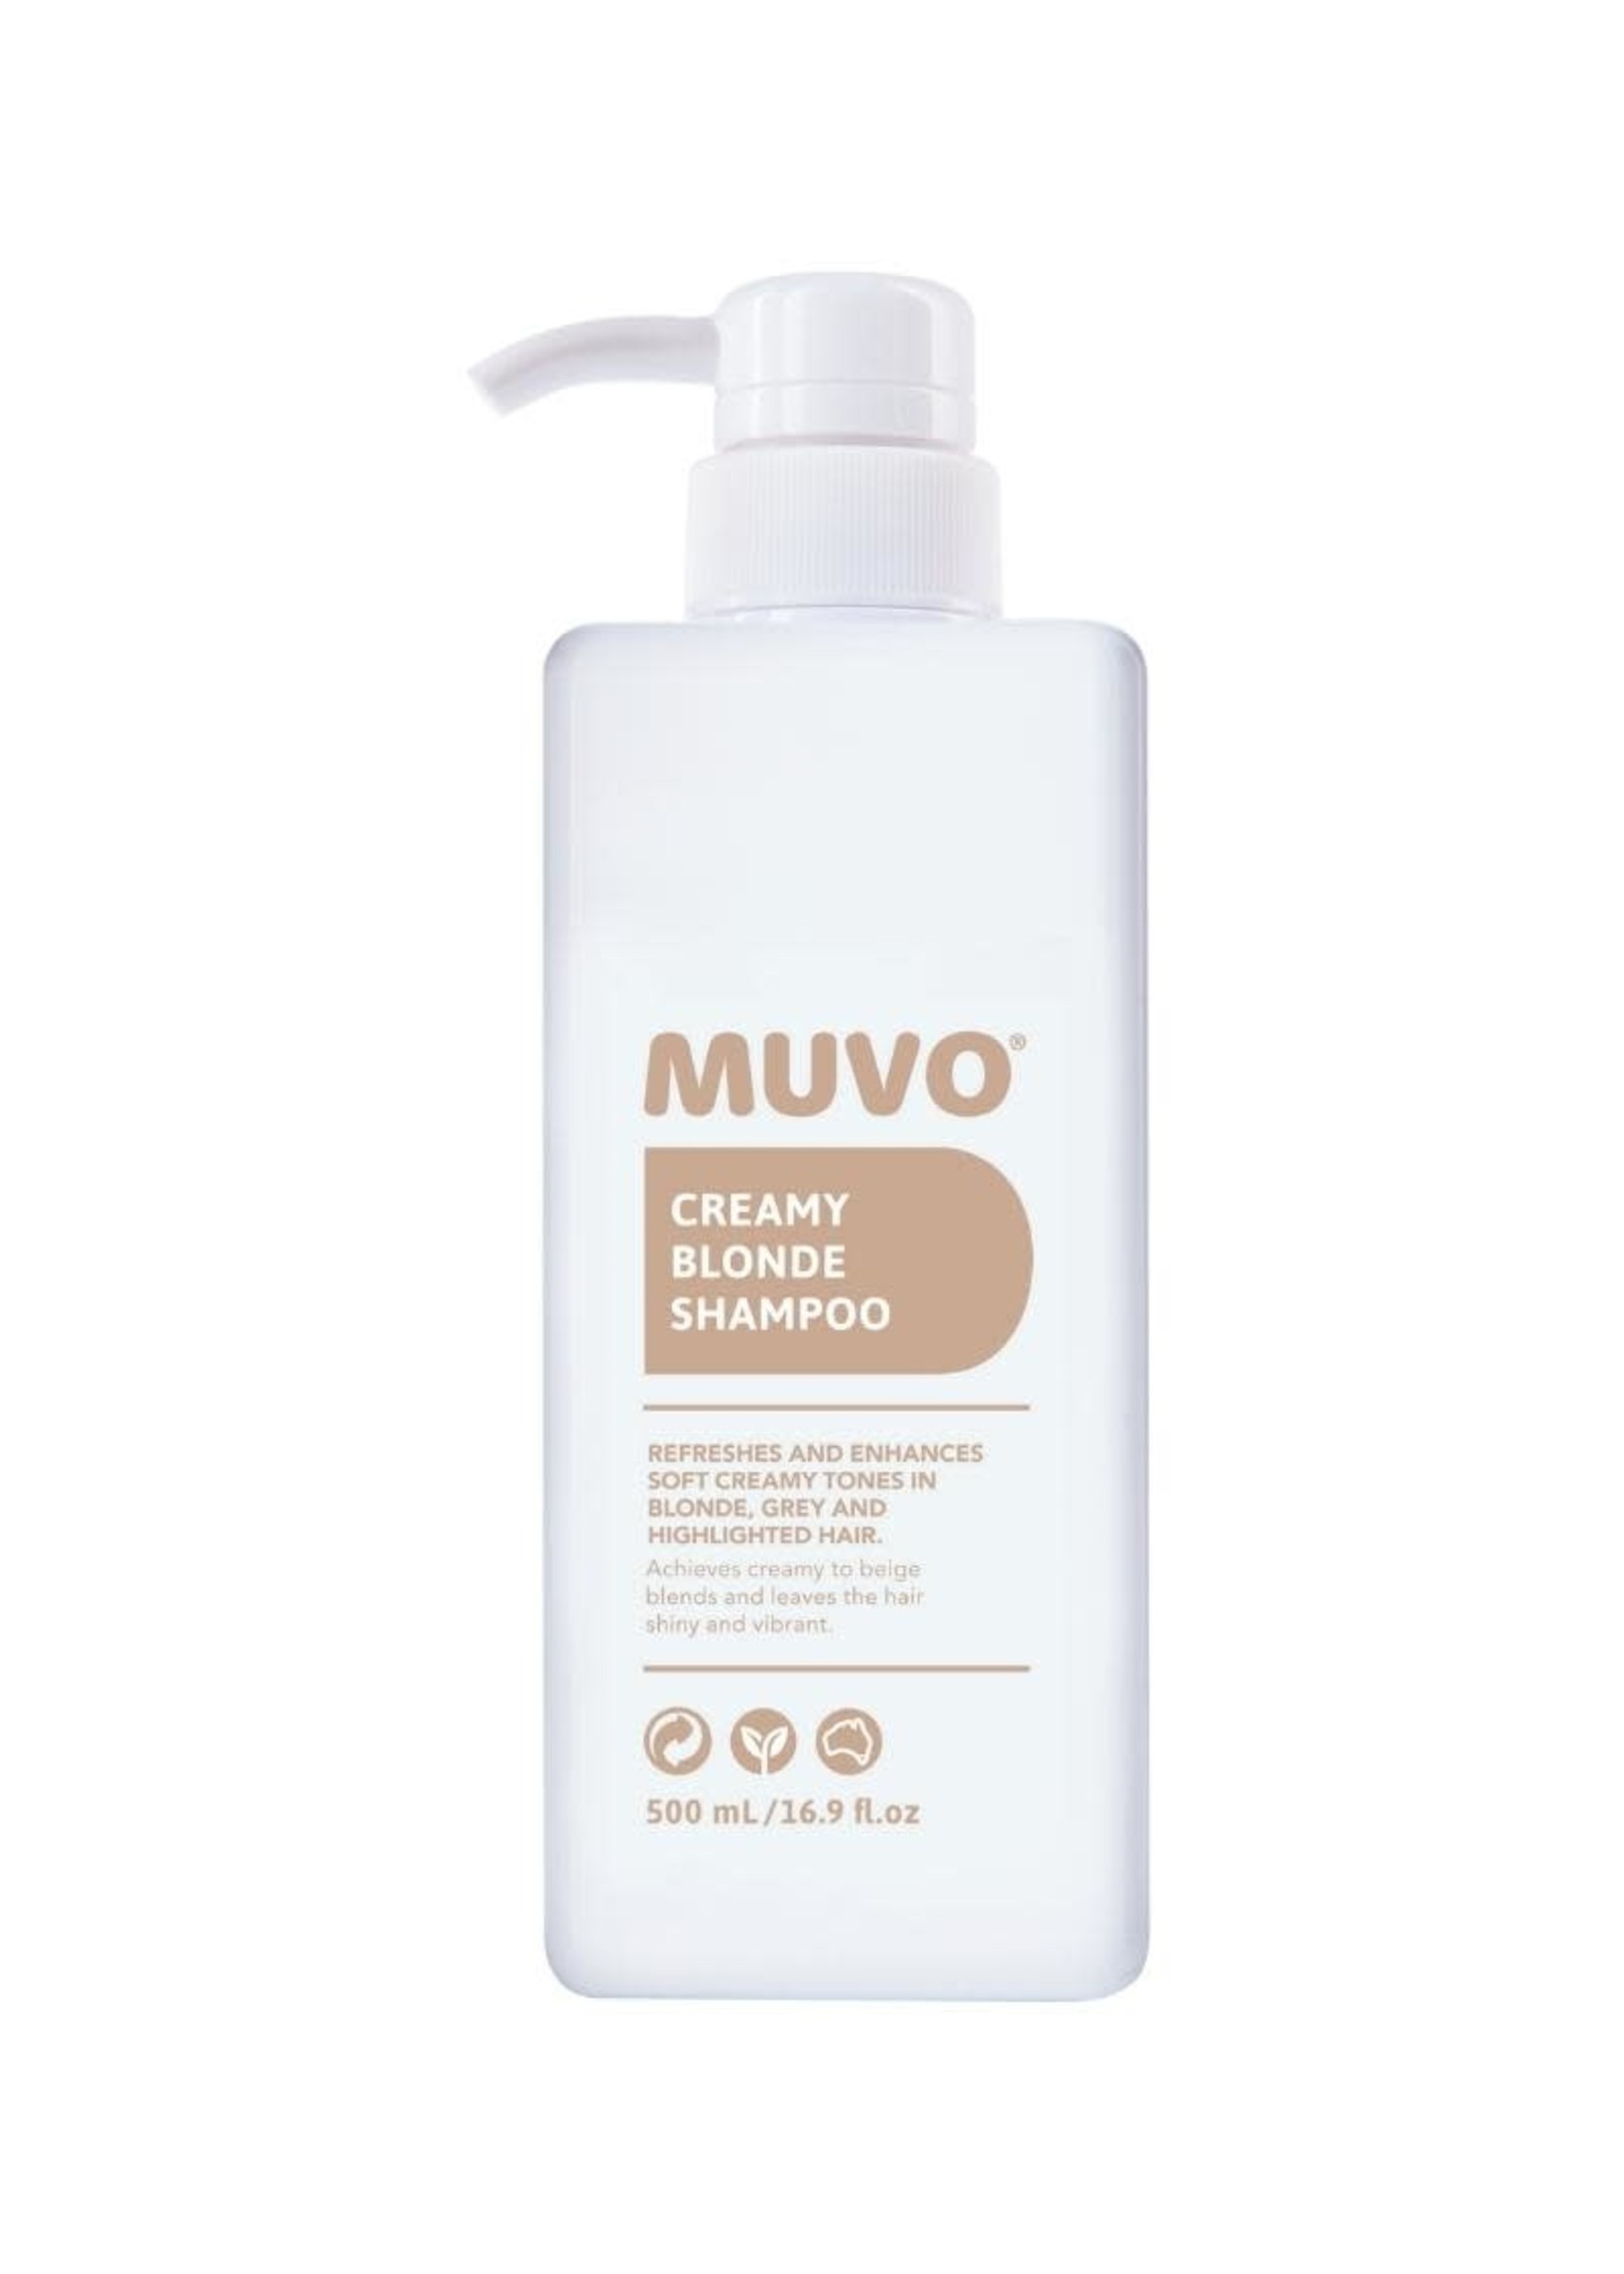 Muvo MUVO Creamy Blonde Shampoo 500ml